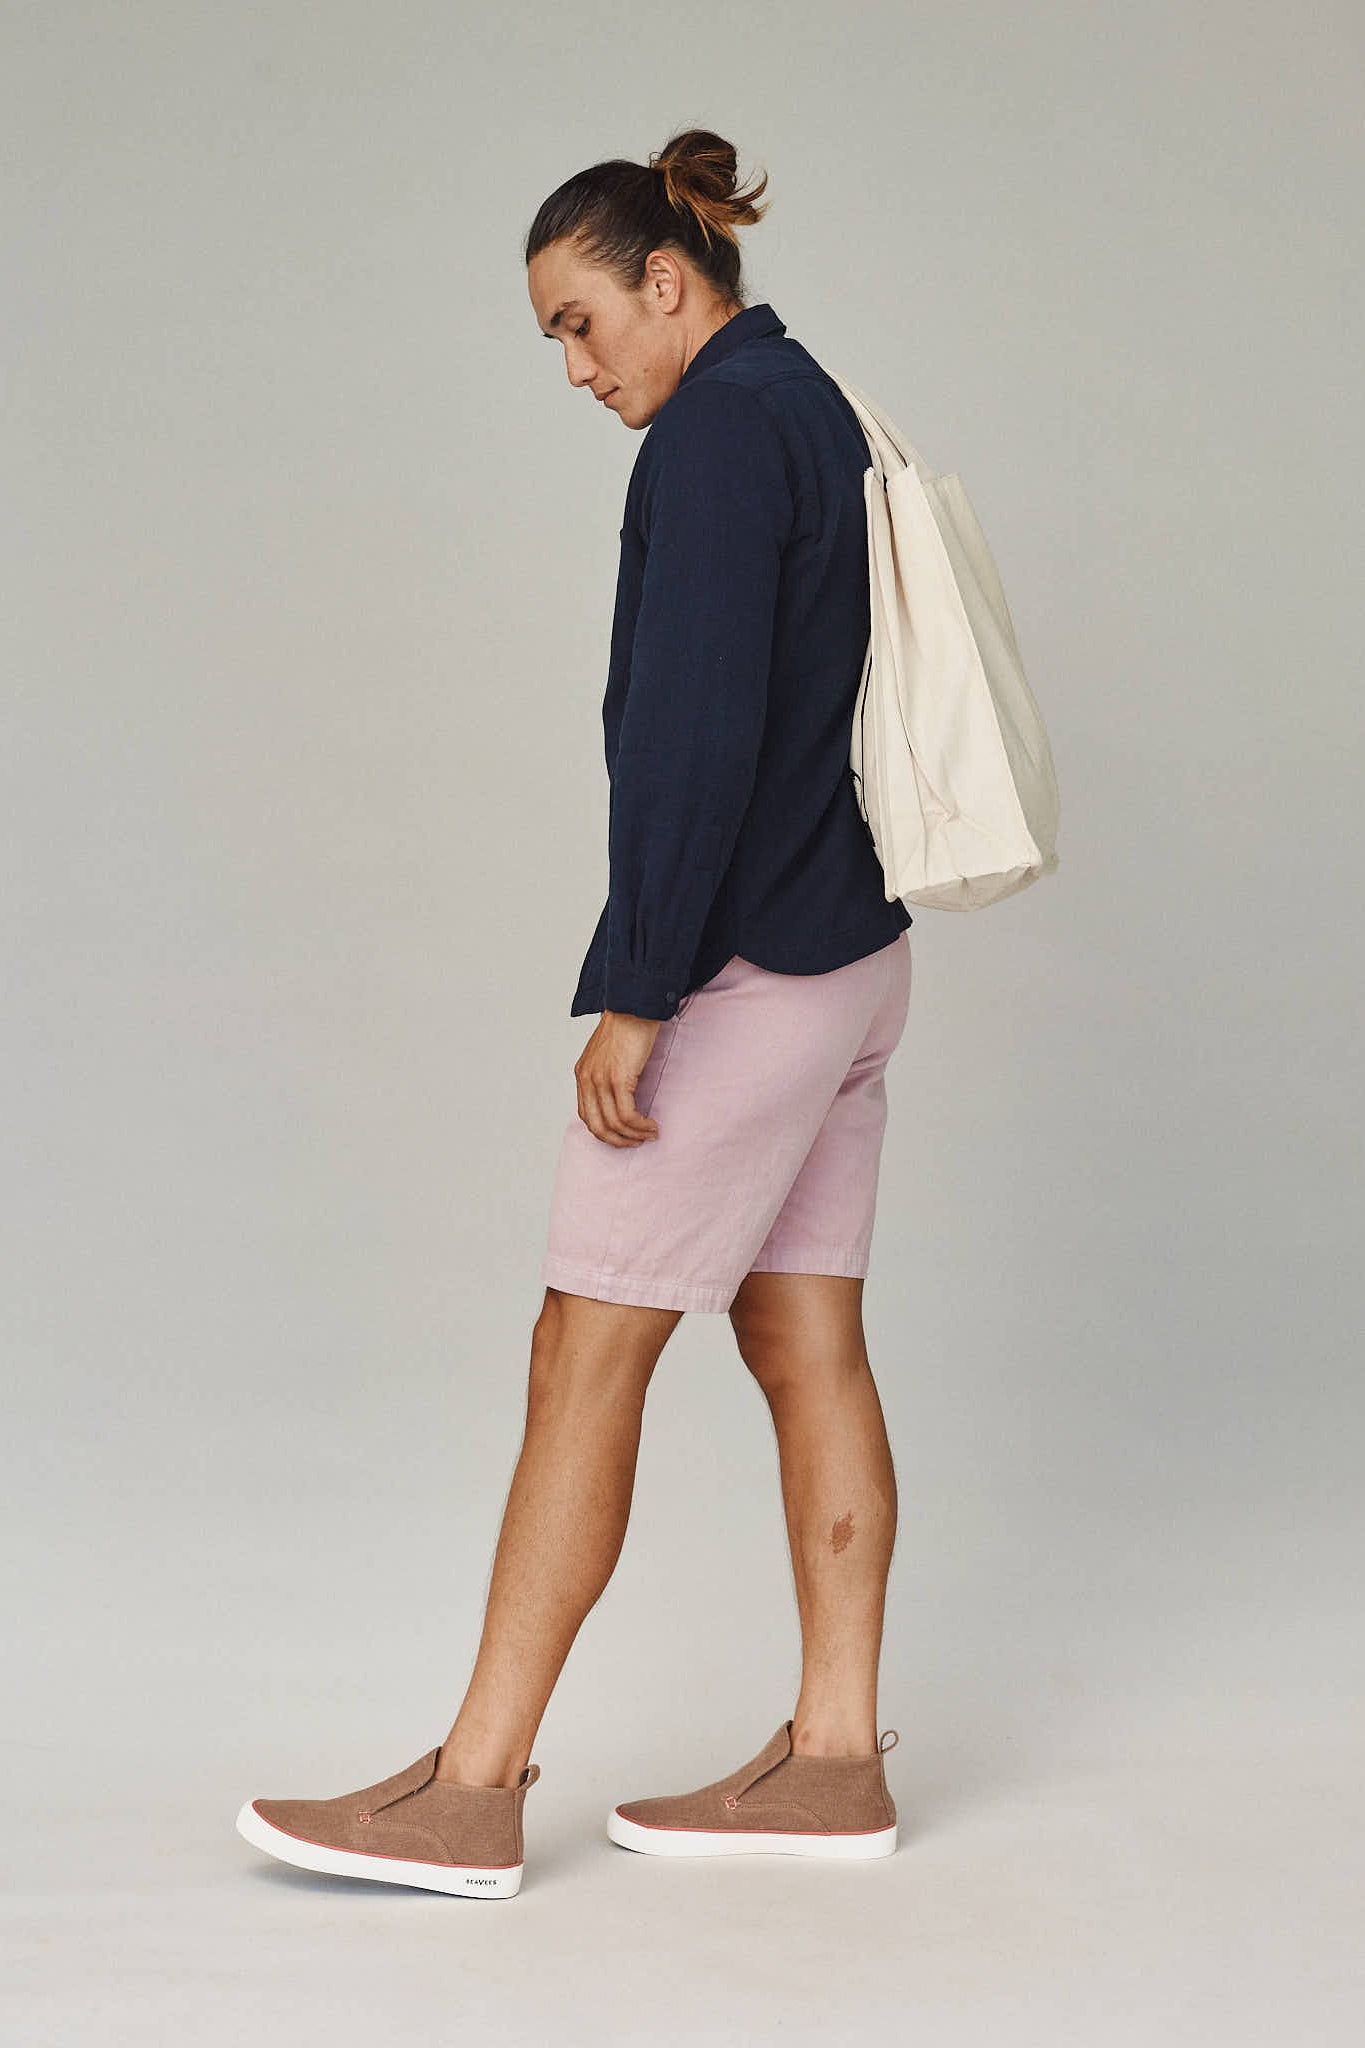 Sandpoint Snap Jacket | Jungmaven Hemp Clothing & Accessories / Color: